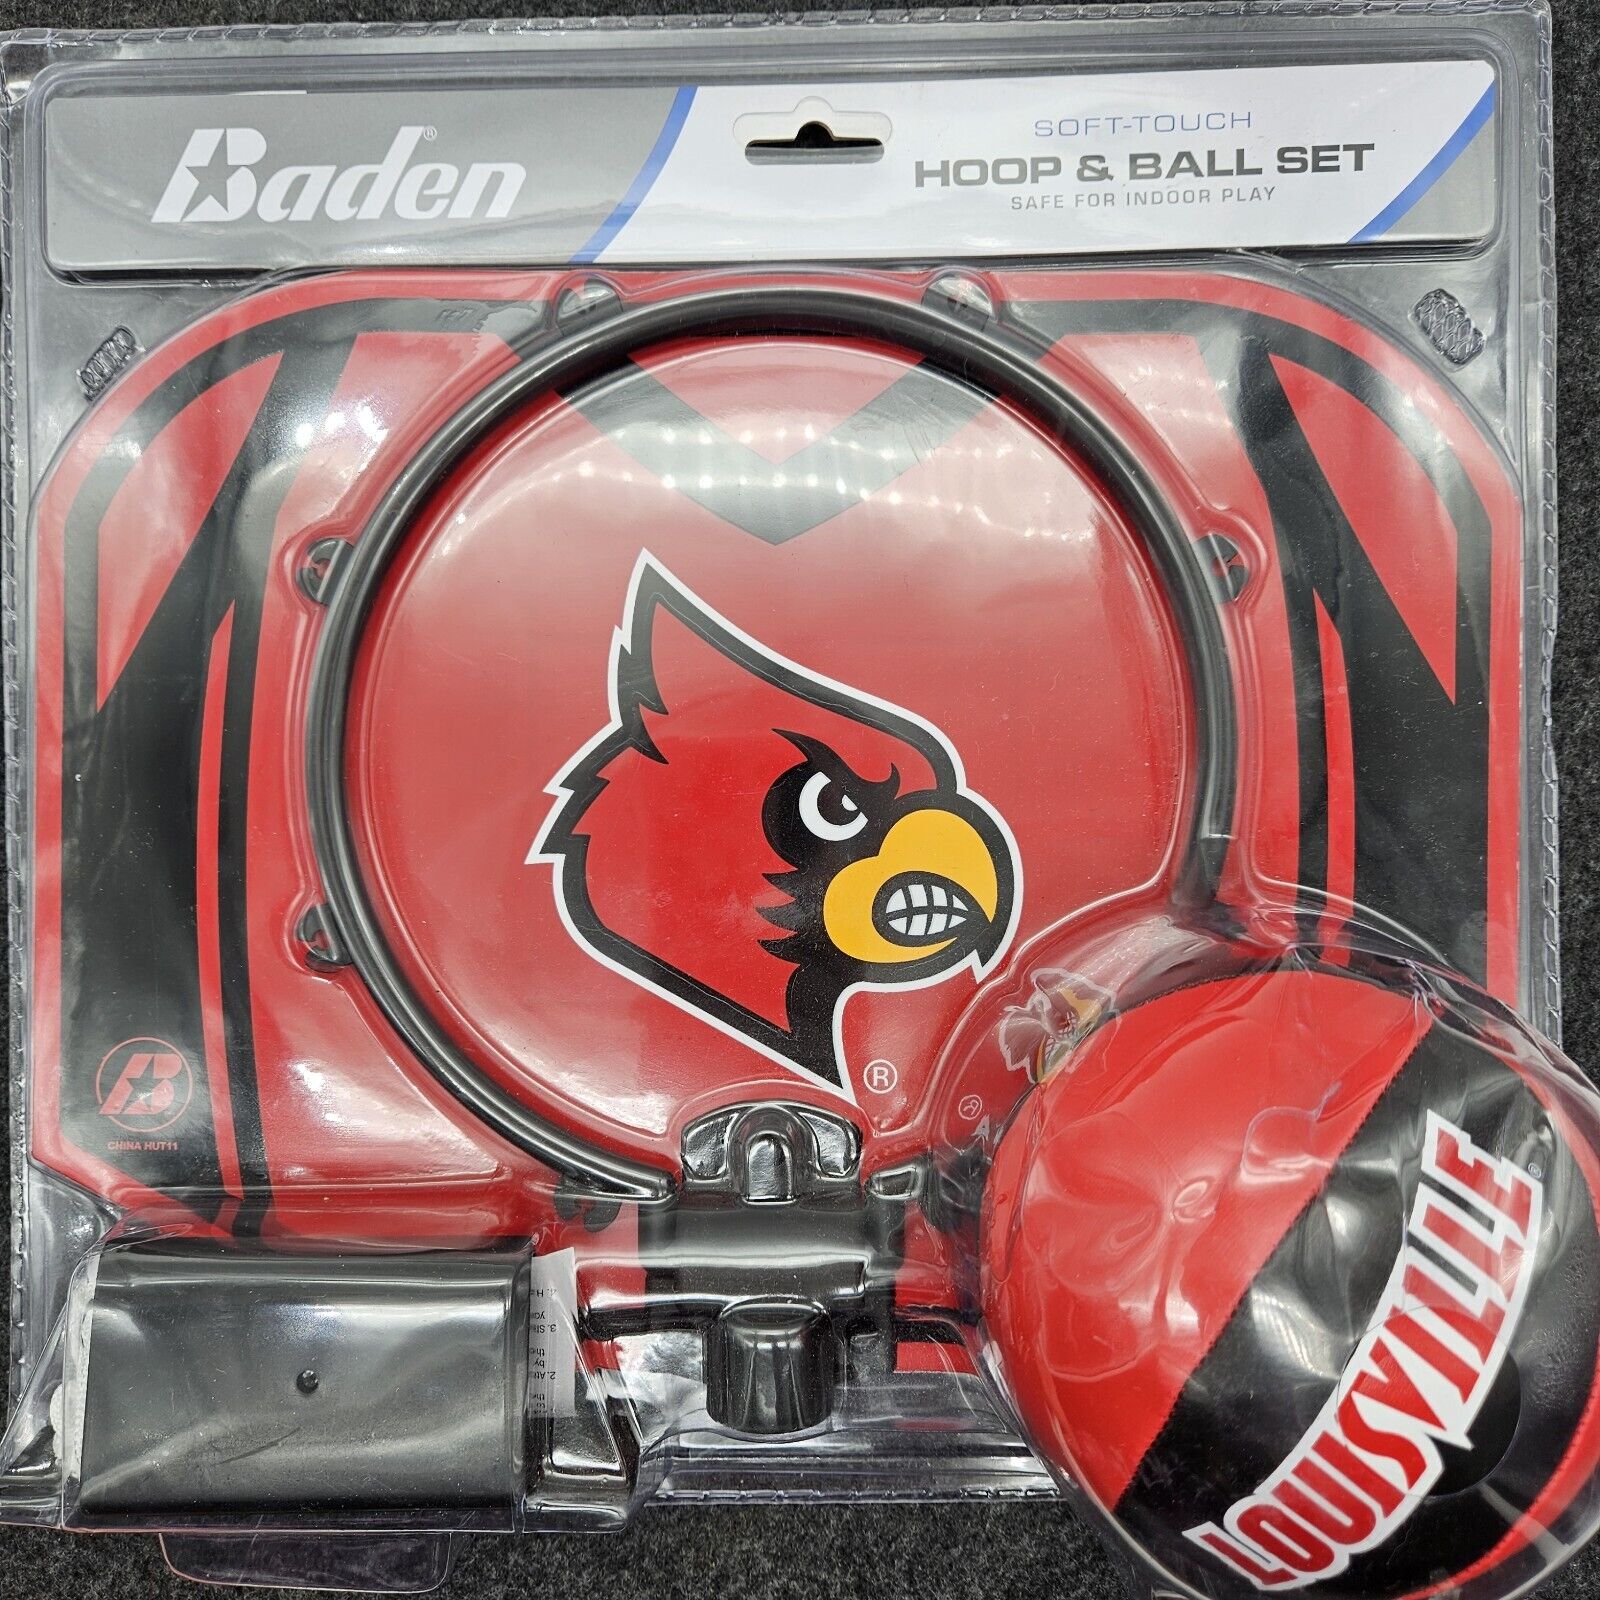 University of Louisville Cardinals Soft-Touch Hoop And Ball Set